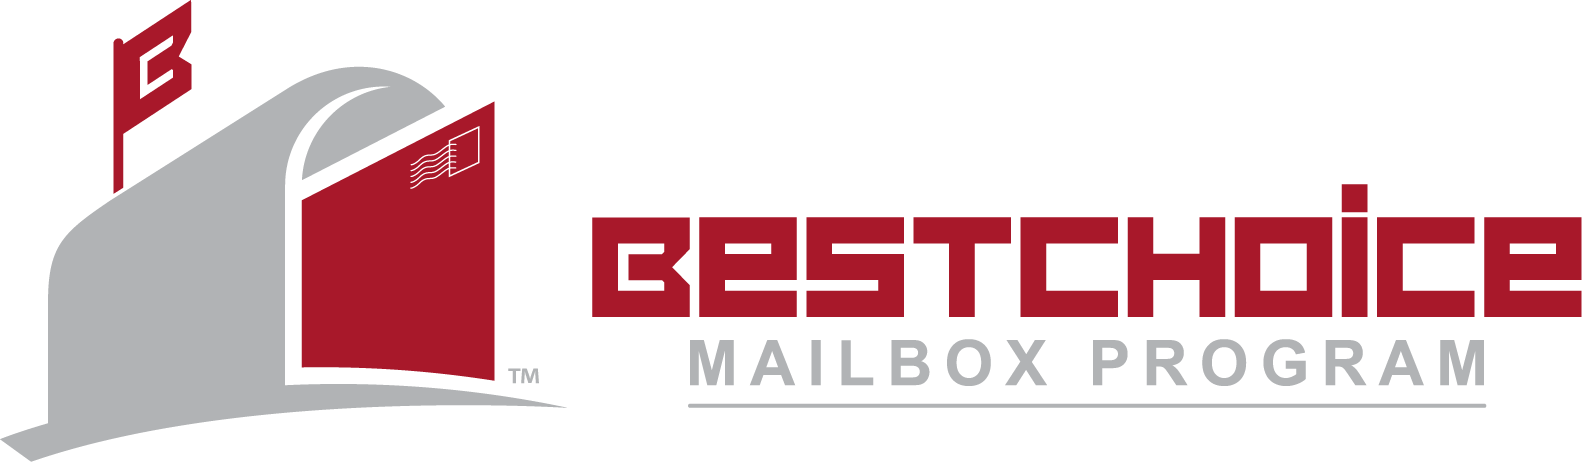 Best Choice Mailbox Program